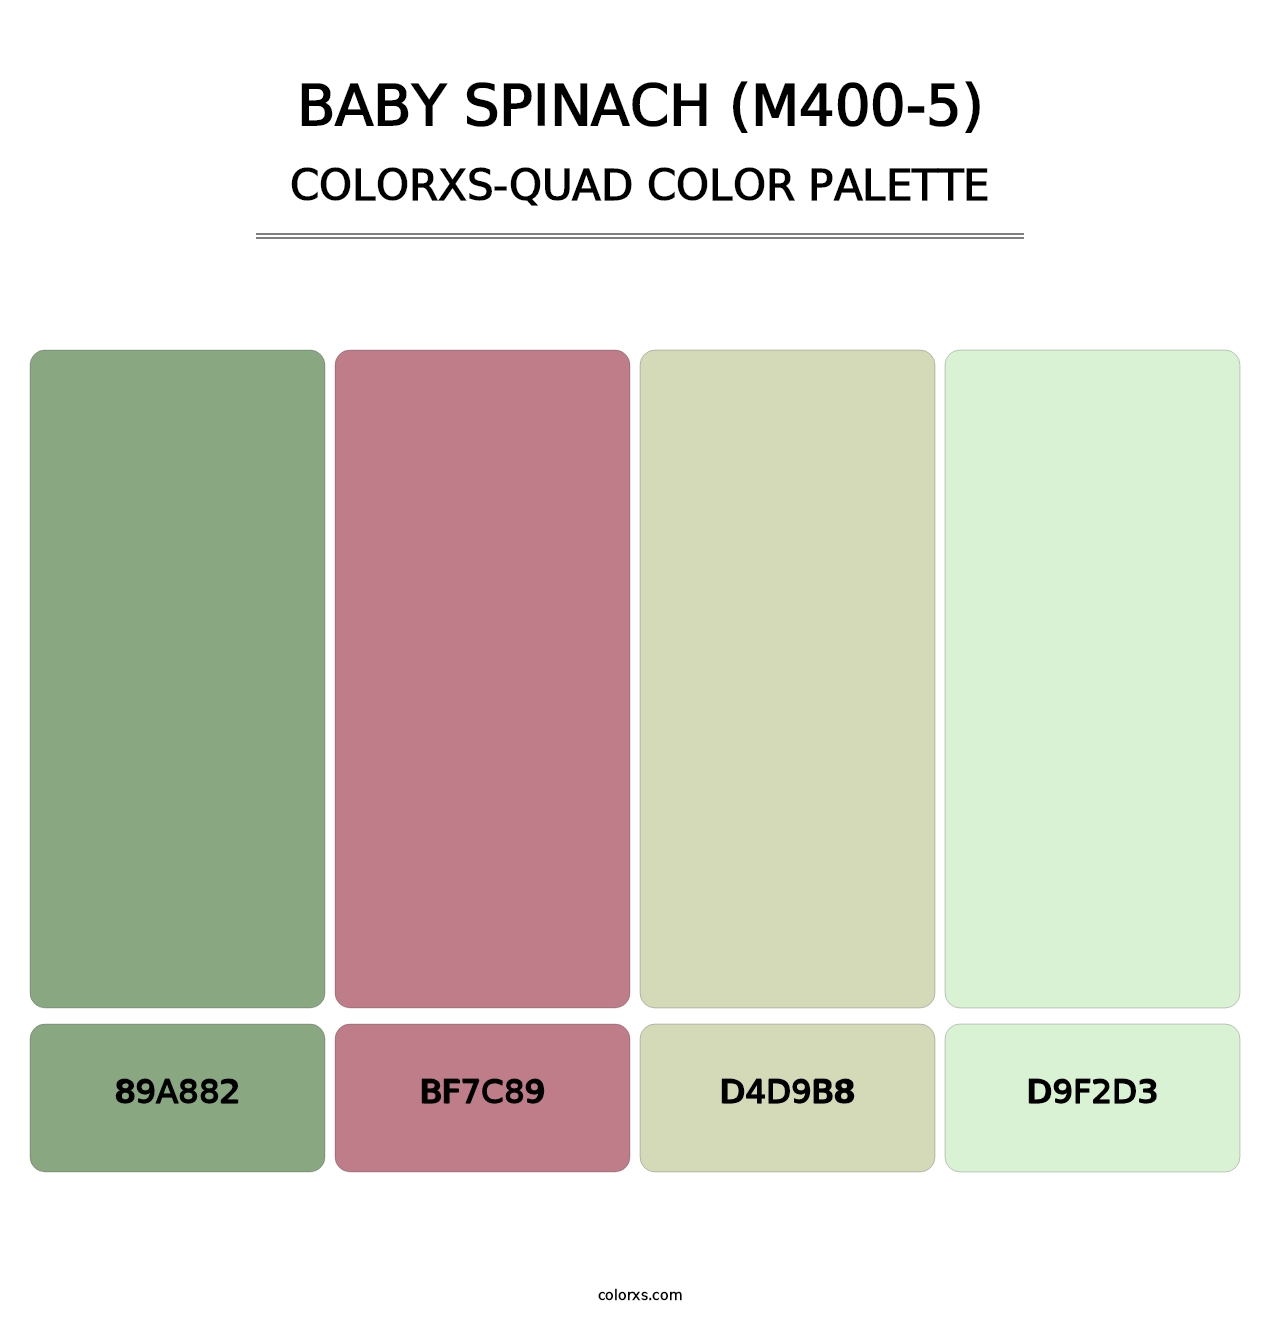 Baby Spinach (M400-5) - Colorxs Quad Palette